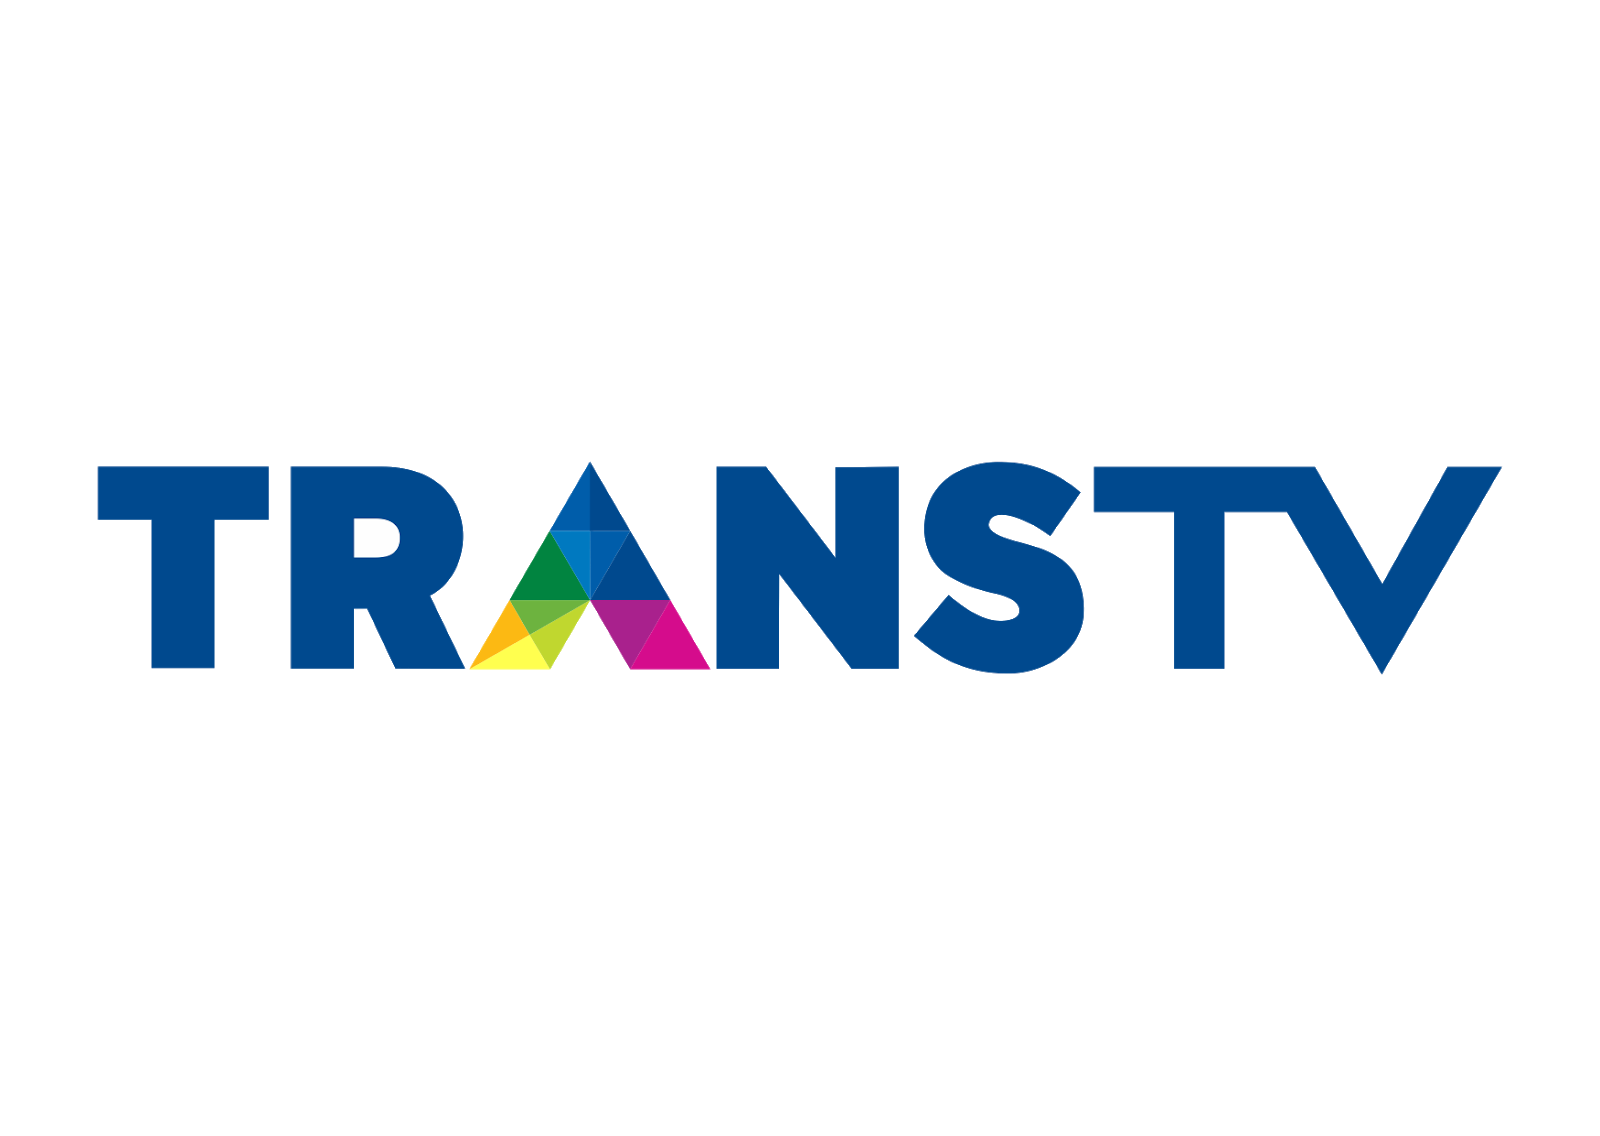 Trans Tv logo